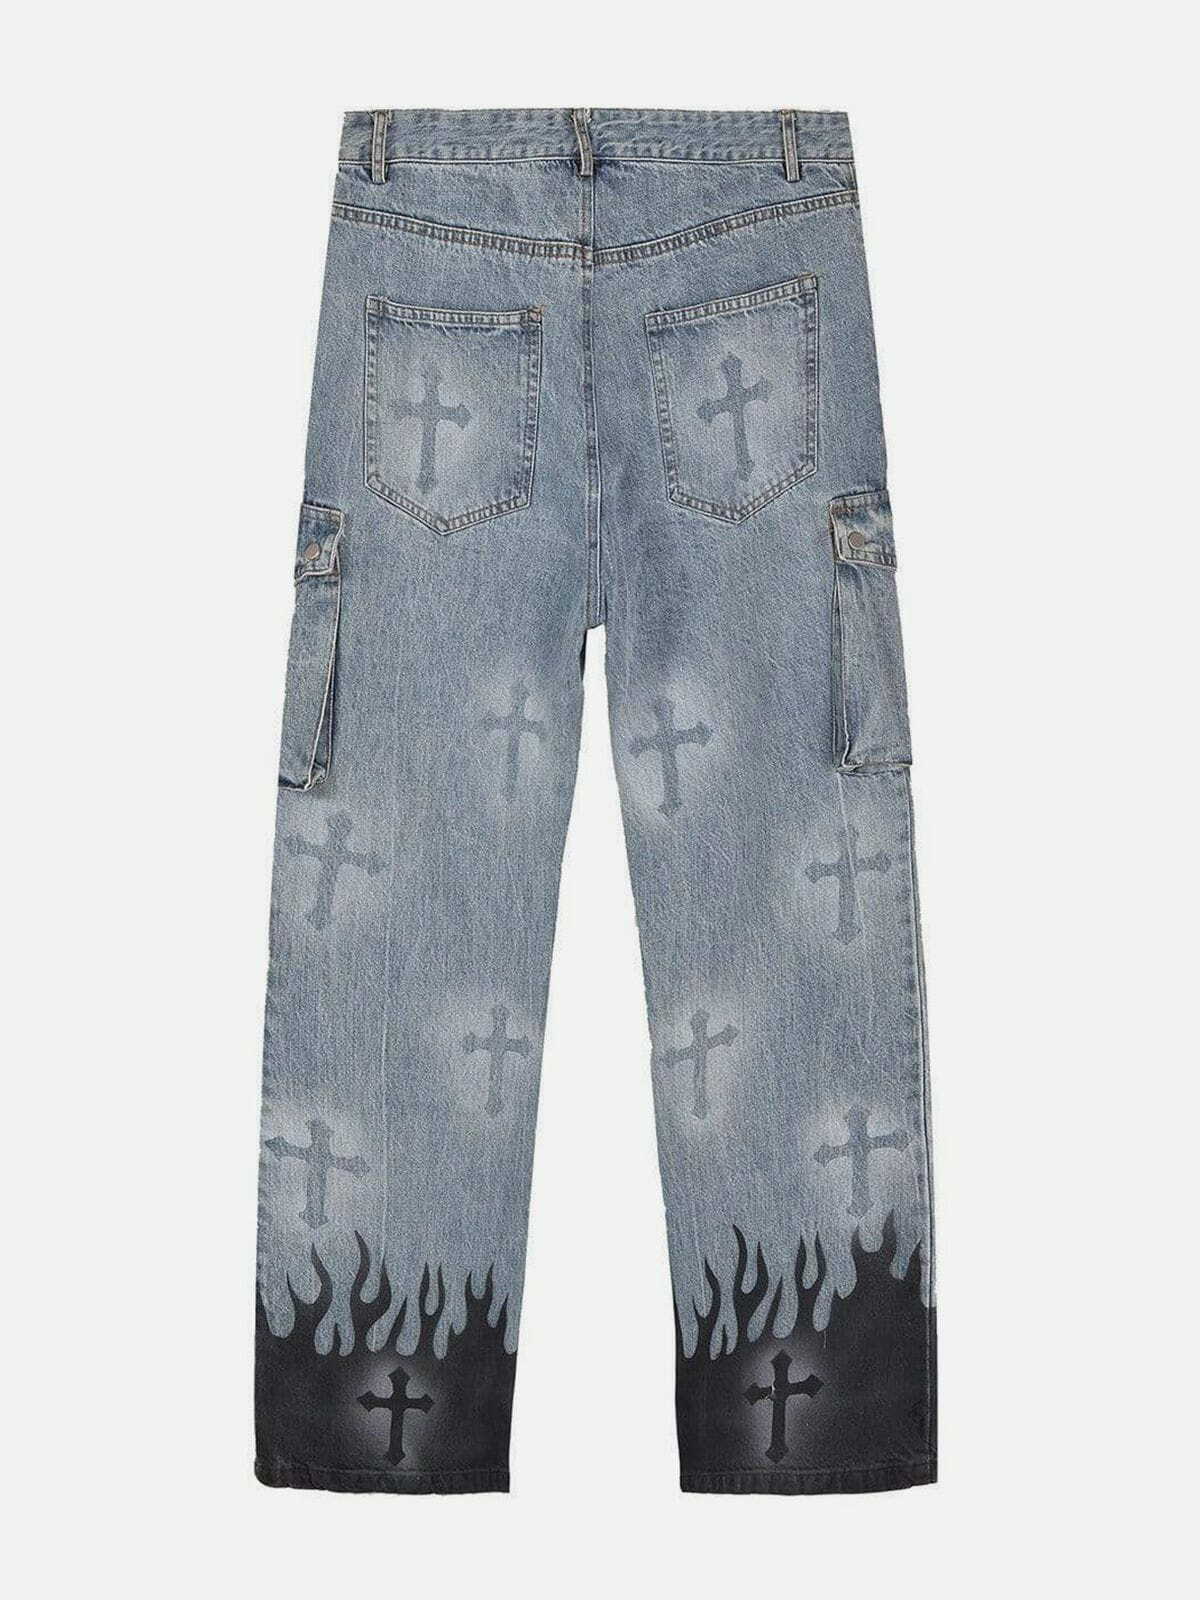 cross vibe lowrise jeans edgy & retro streetwear 3197